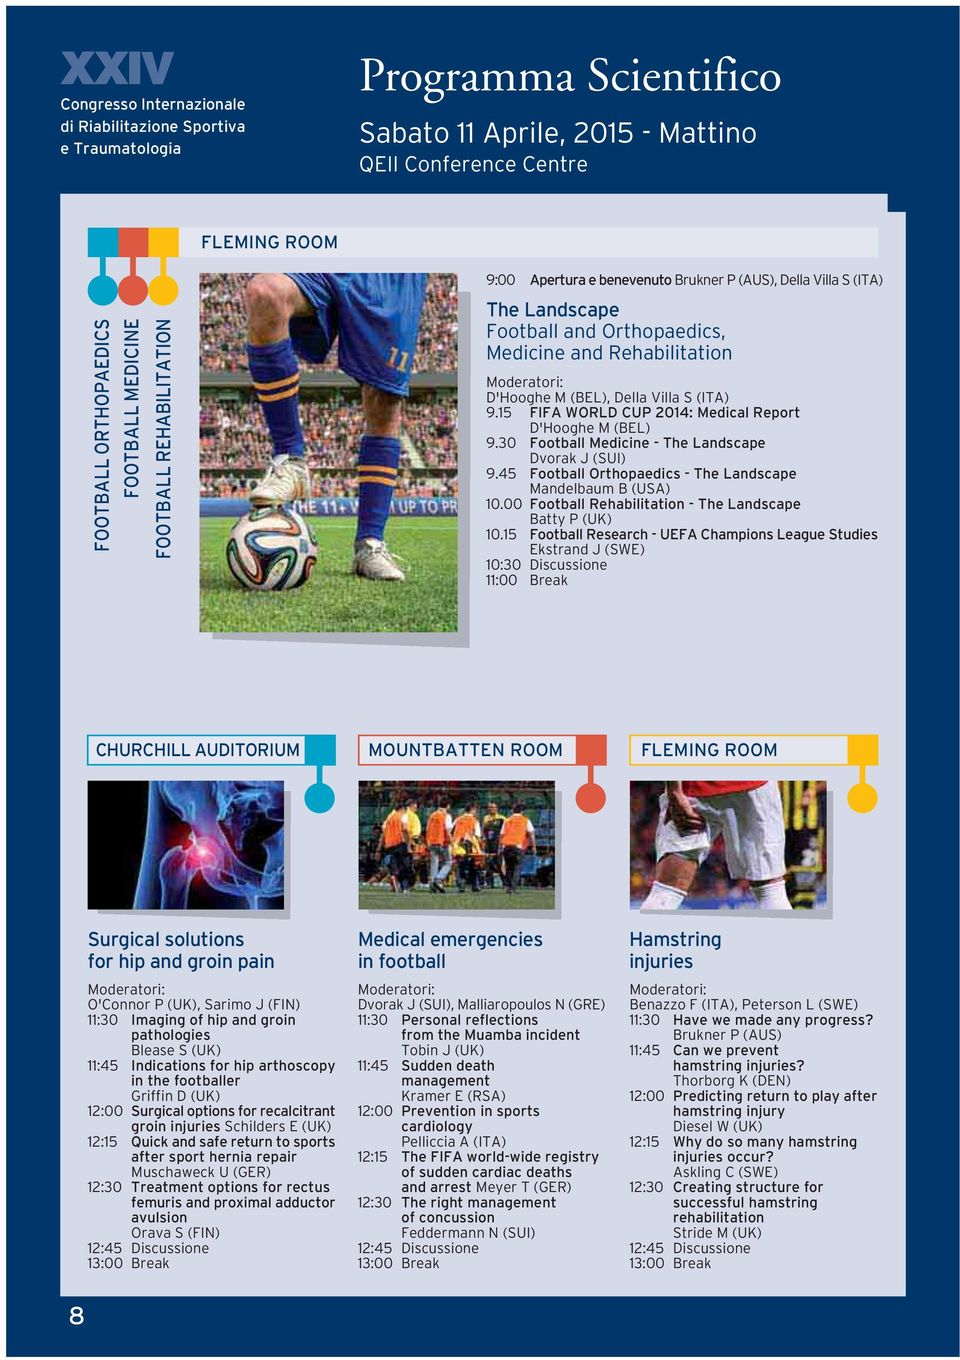 15 FIFA WORLD CUP 2014: Medical Report D'Hooghe M (BEL) 9.30 Football Medicine - The Landscape Dvorak J (SUI) 9.45 Football Orthopaedics - The Landscape Mandelbaum B (USA) 10.